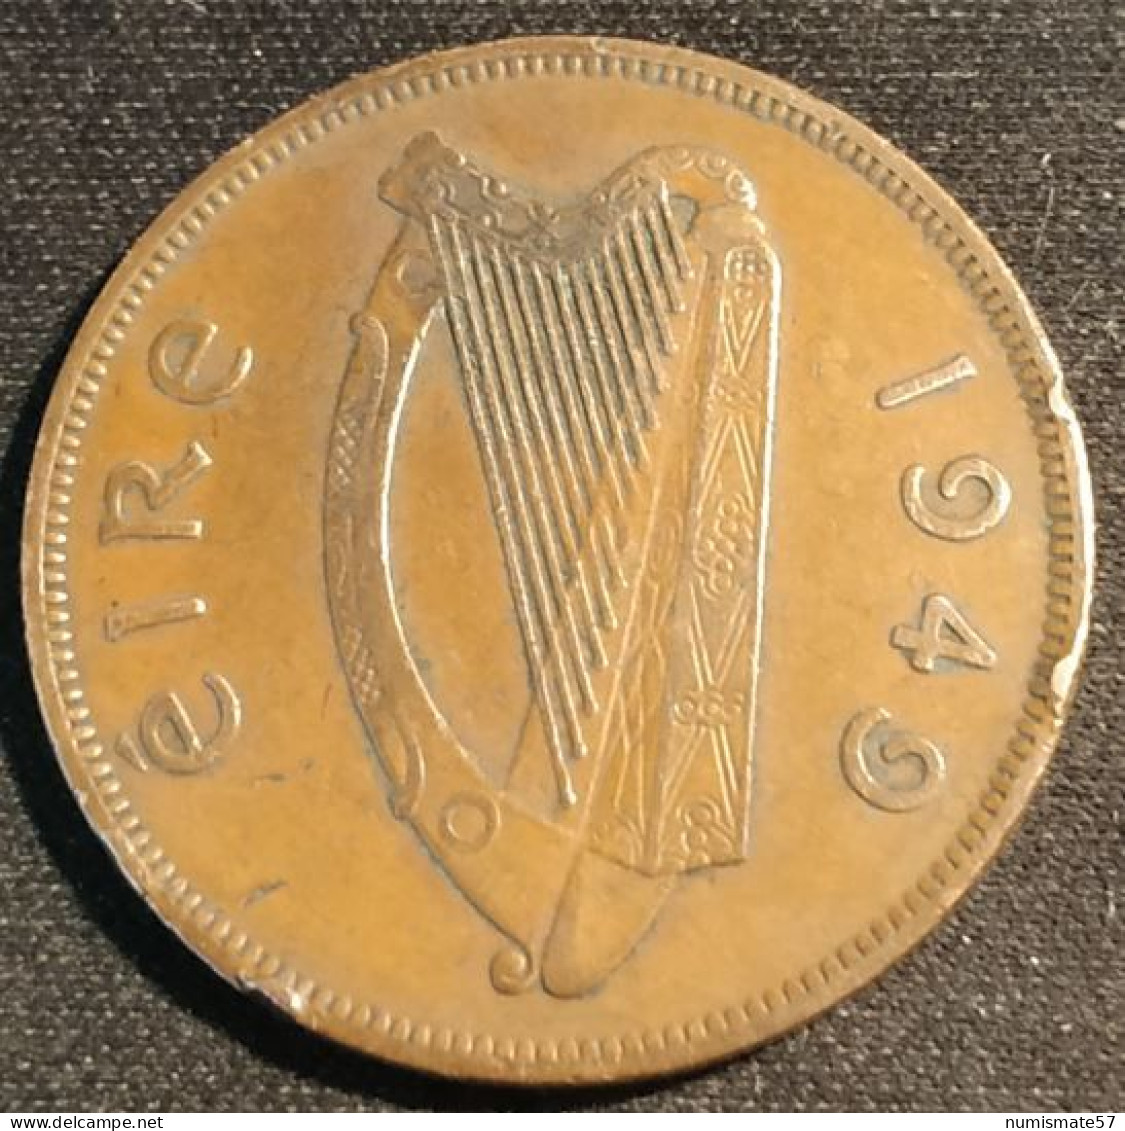 IRLANDE - EIRE - 1 PINGIN 1949 - KM 11 - PENNY - IRELAND - Ierland